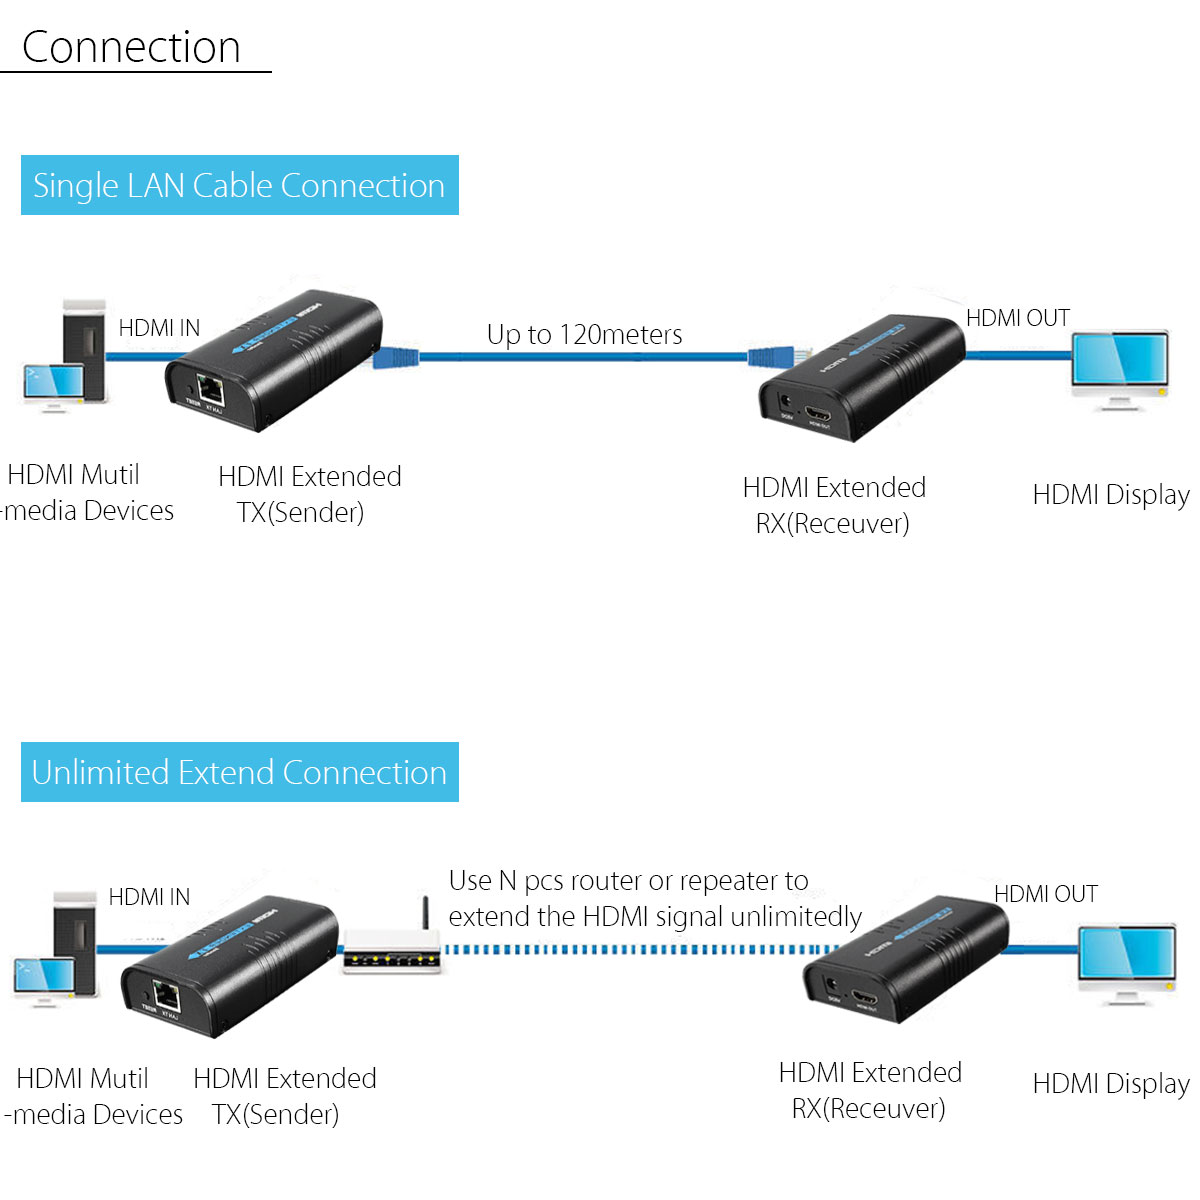 HDMI-Extender-RX-Receiver-100-120m-Support-1080P-Over-Cat5-Cat5e-Cat6-1265248-2